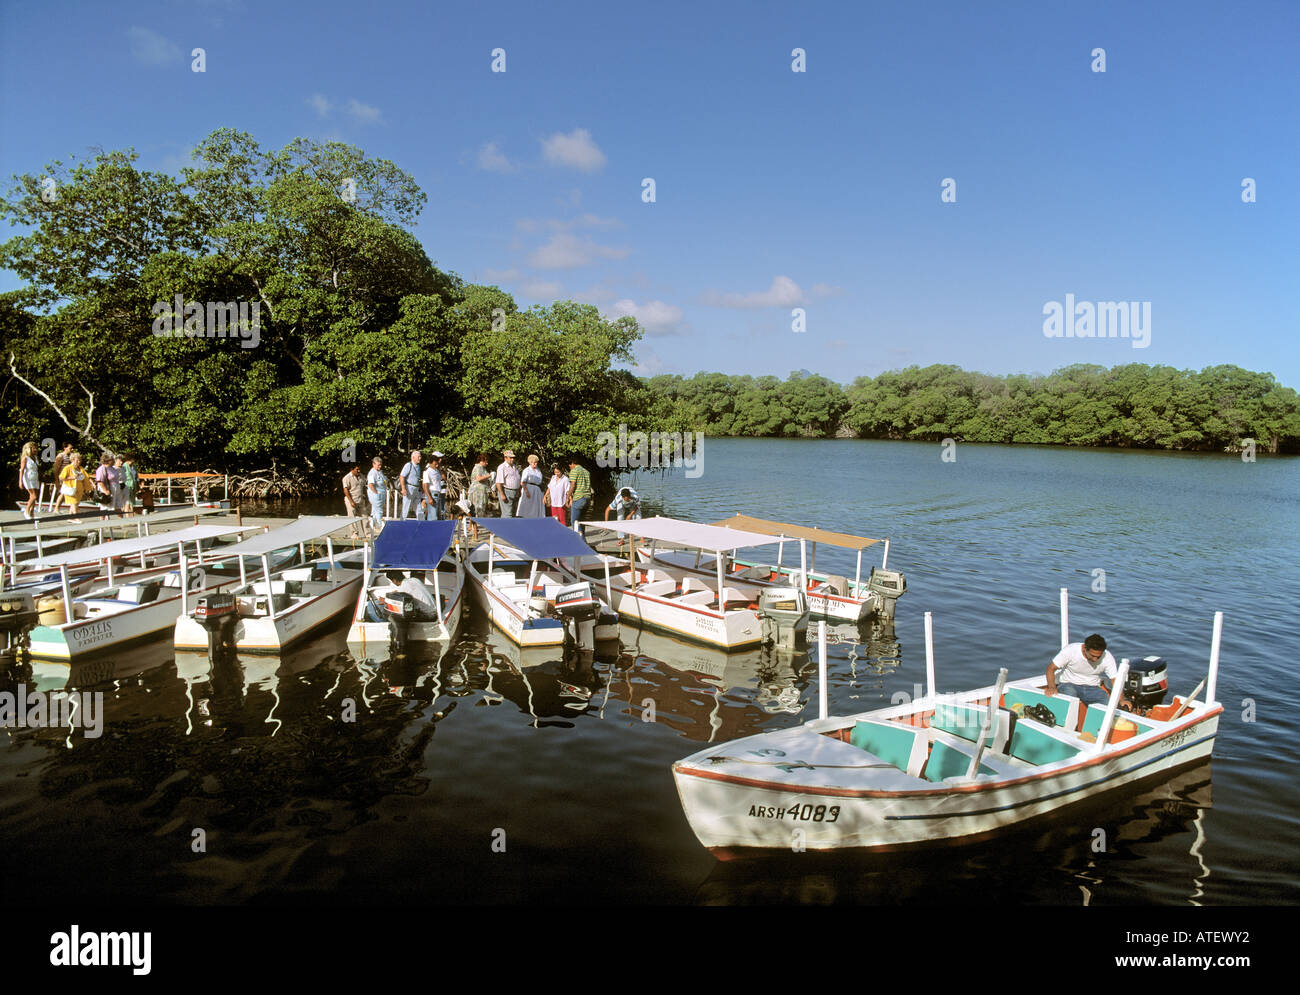 Isla Margarita Nueva Esparta State Venezuela Tourists boarding excursion boats in La Restinga National Park lagoon Stock Photo